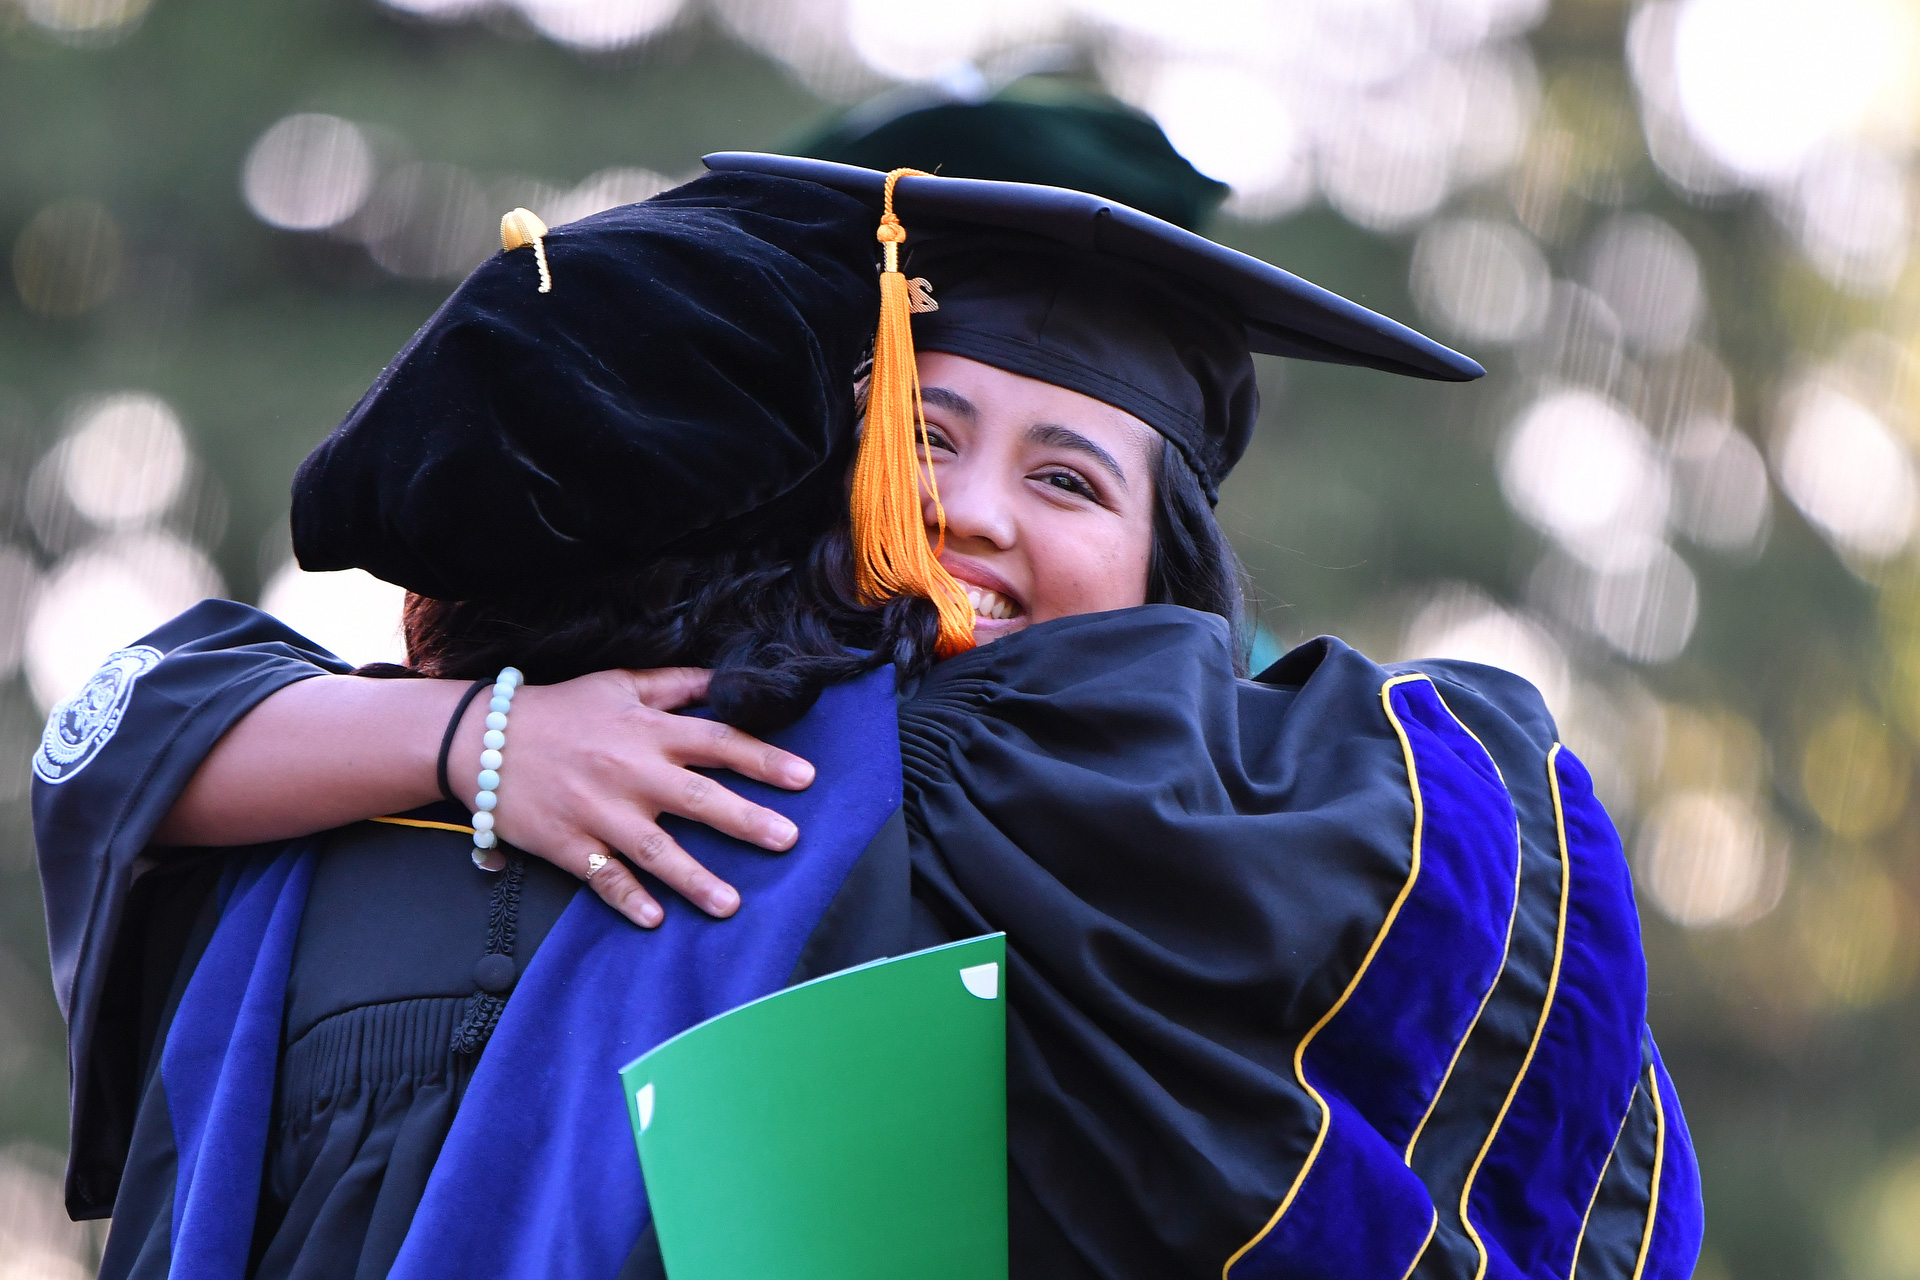 Graduate receives hug